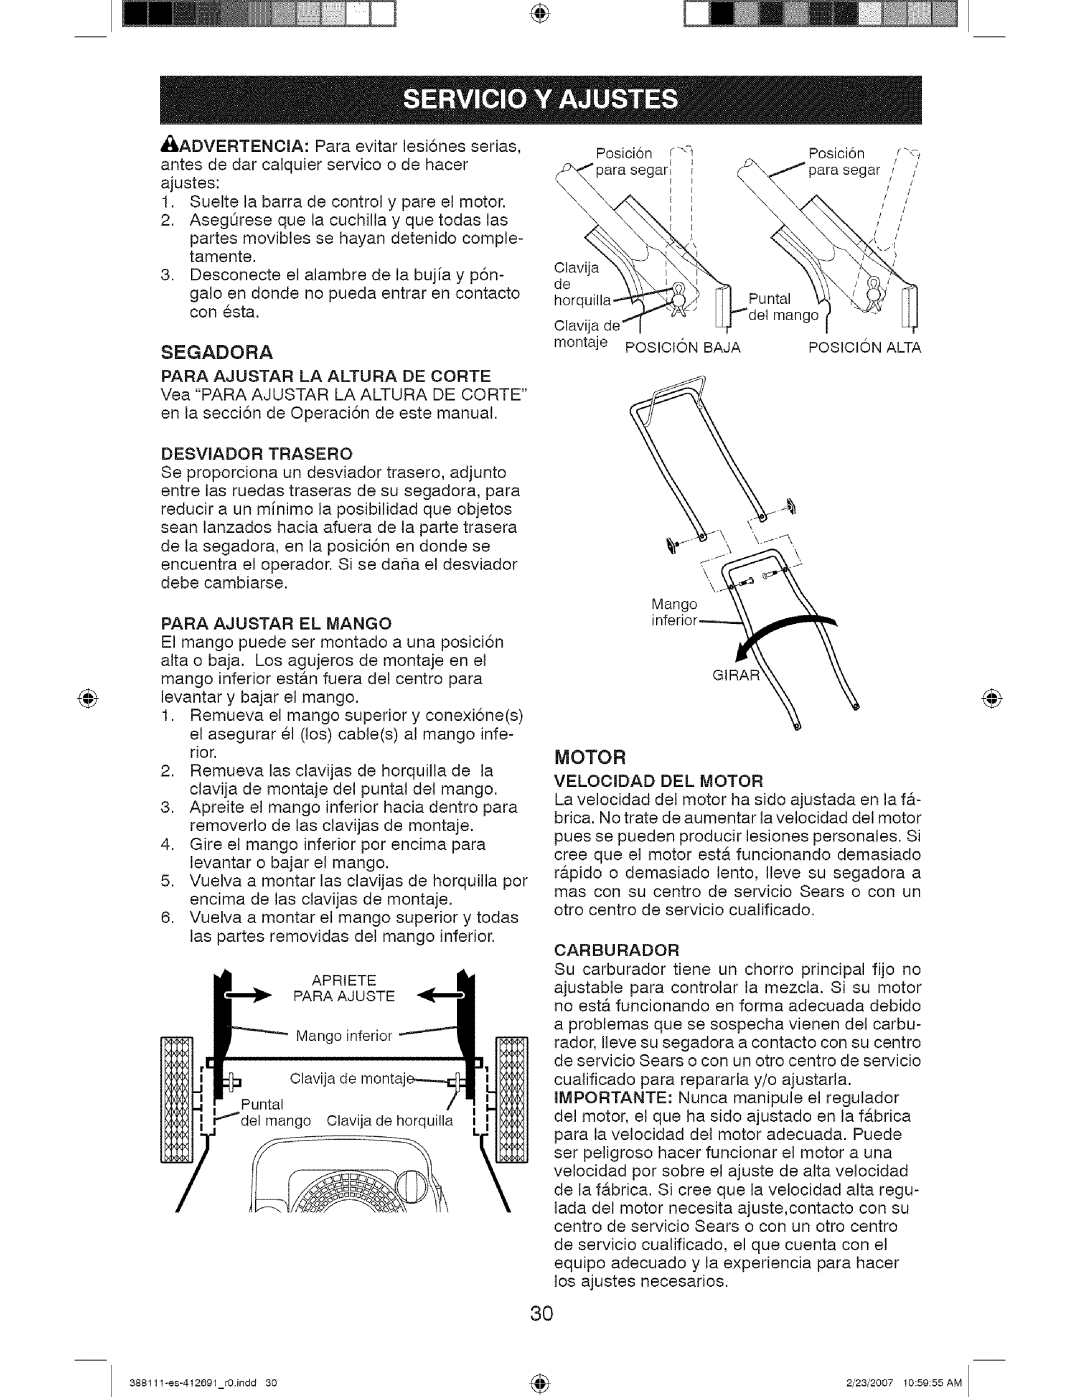 Craftsman 917 388111 owner manual ADVERTENClA Para evitar lesi6nes serias 